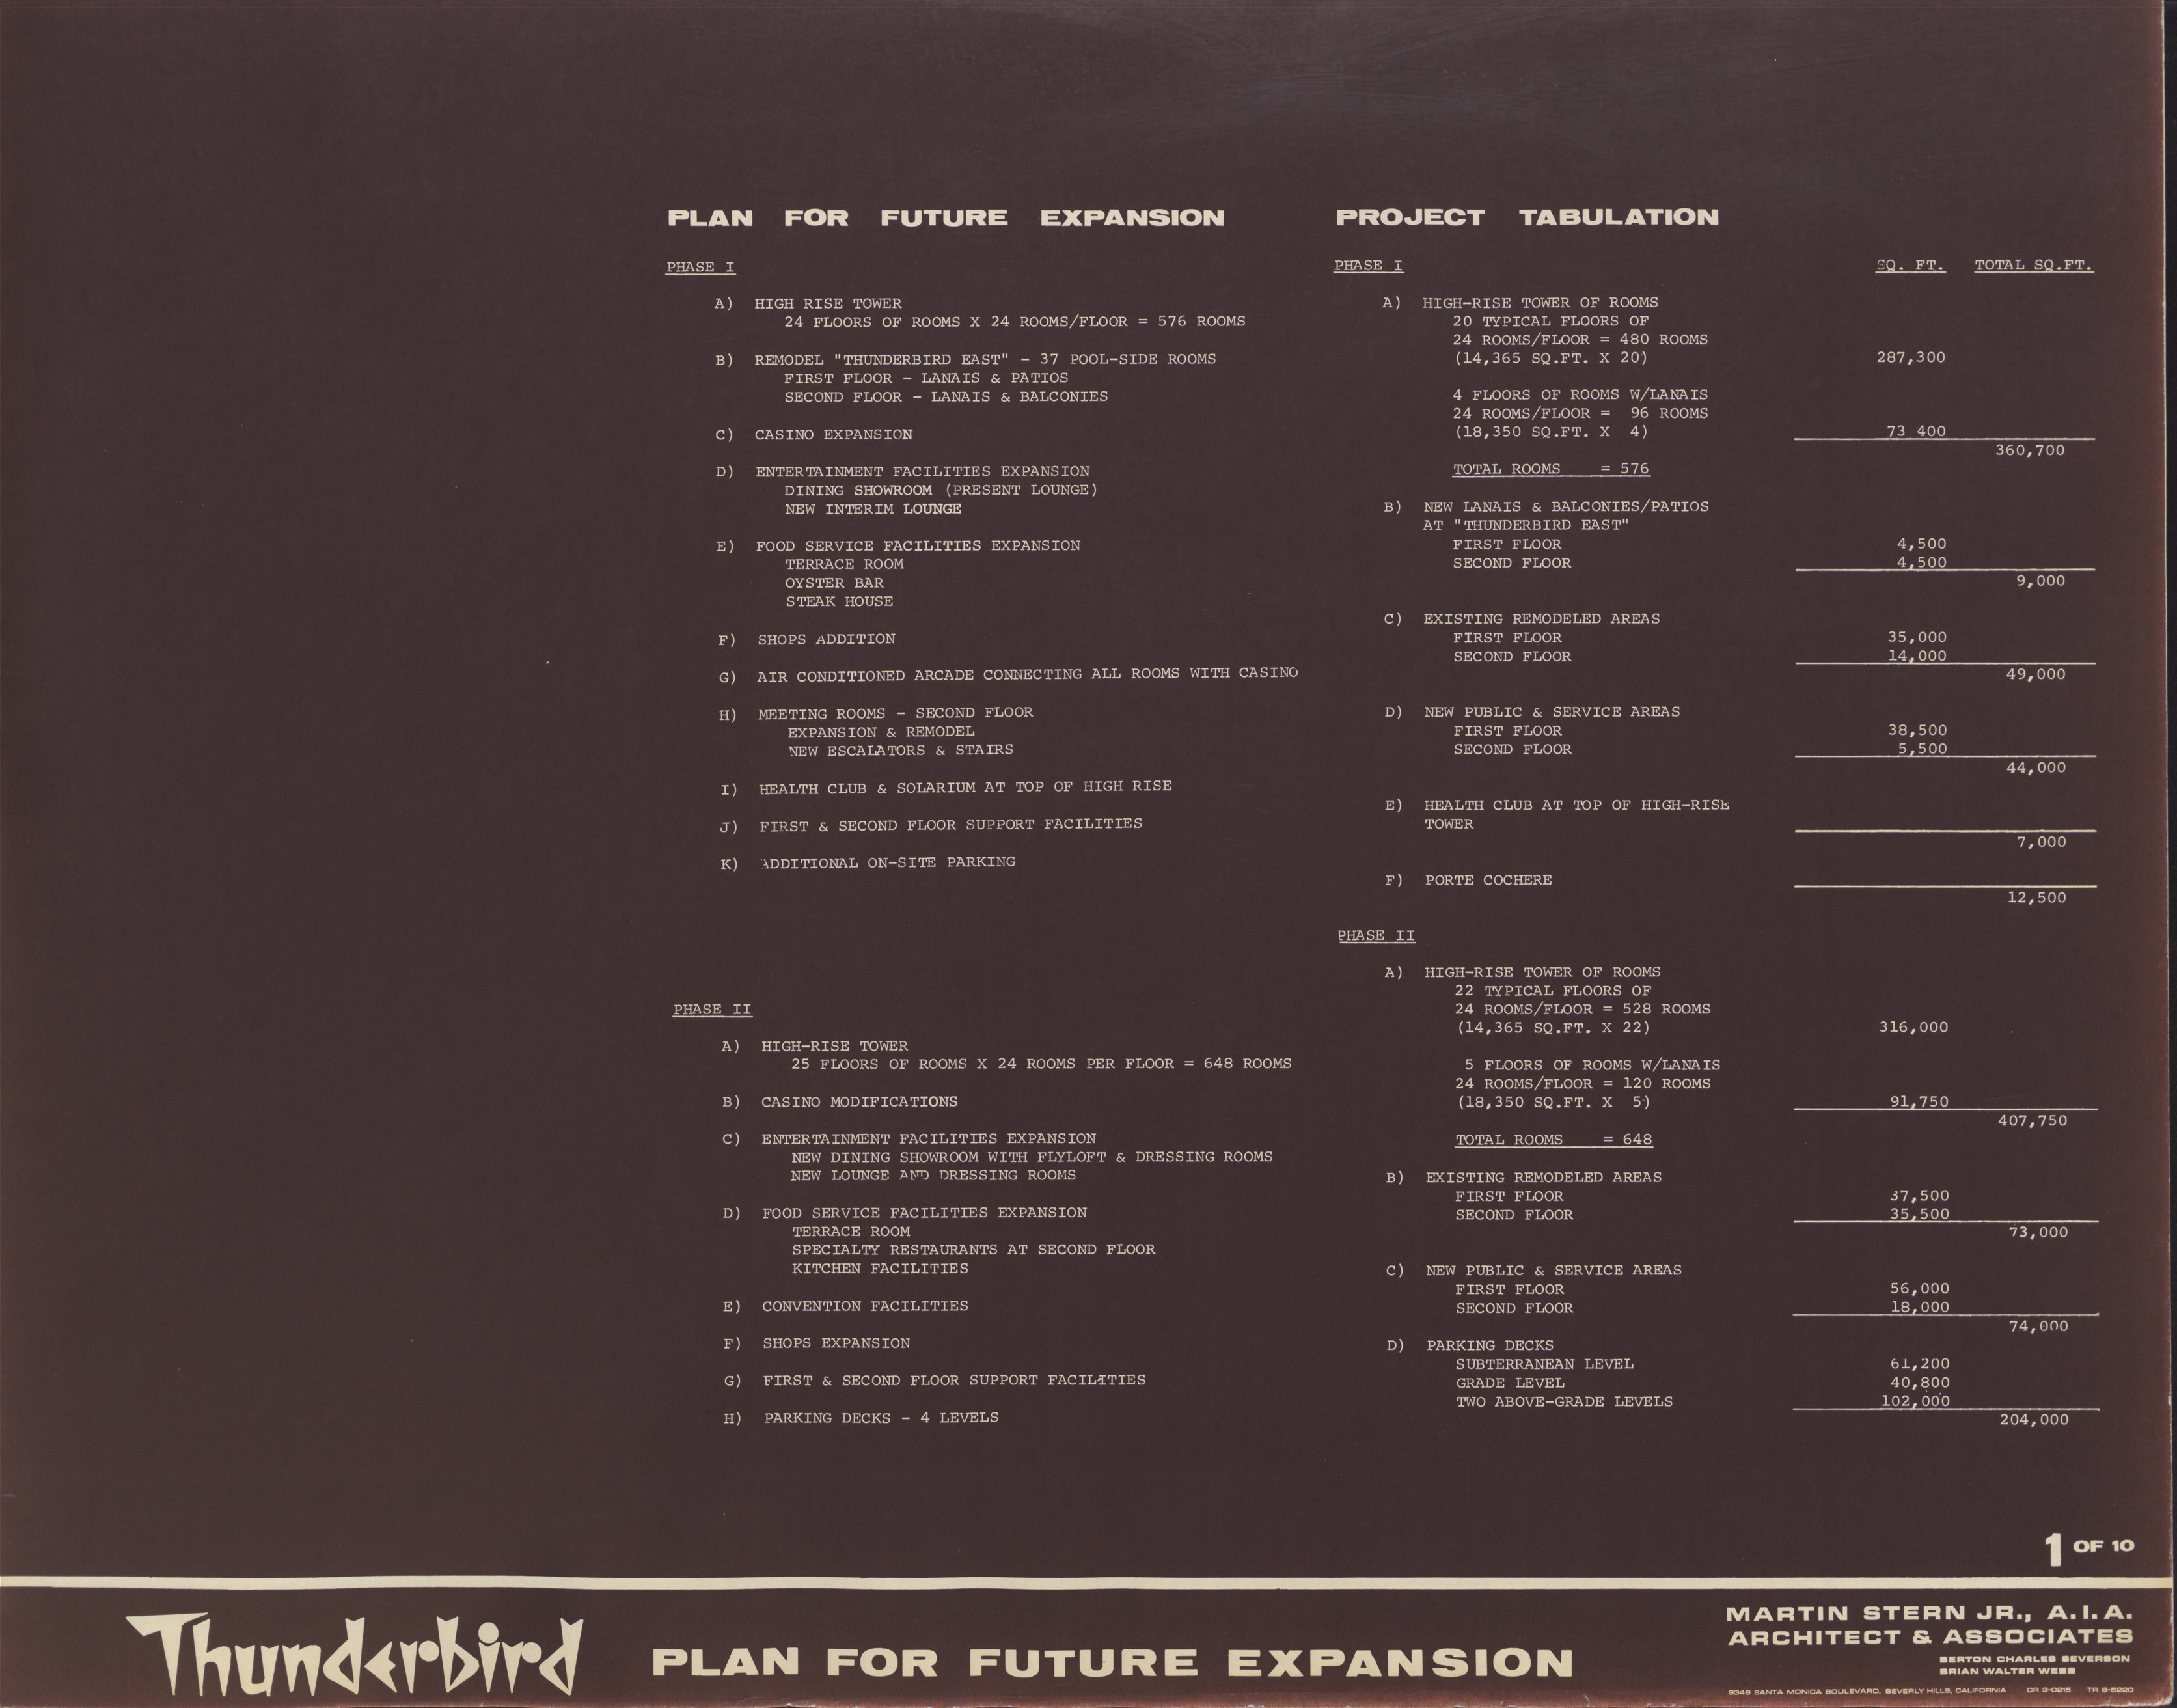 Thunderbird Plan for Future Expansion Proposal, image 1